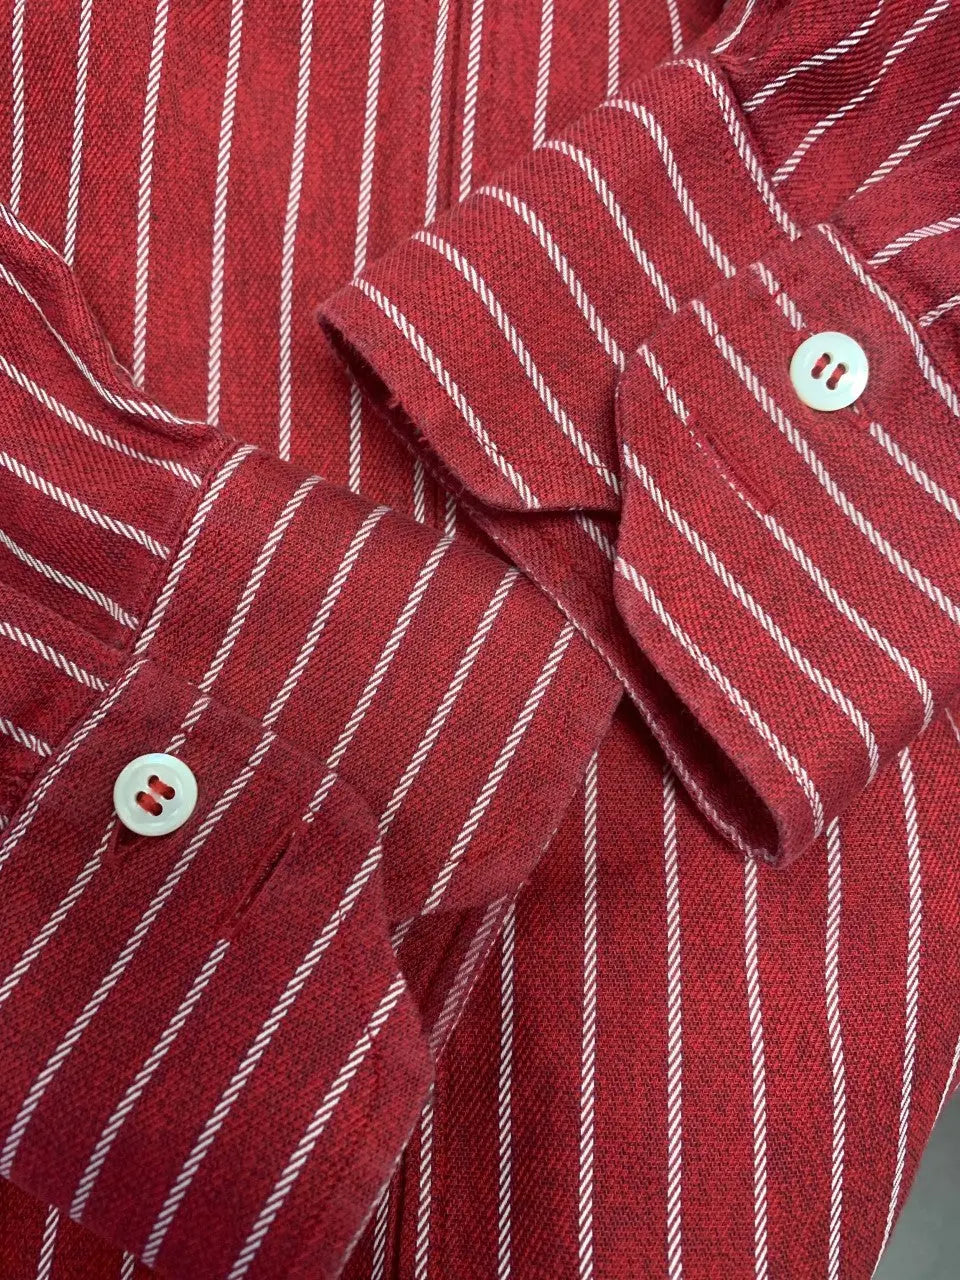 Das Müller Masshemd - Vintage Red Striped Shirt- ThriftTale.com - Vintage and second handclothing